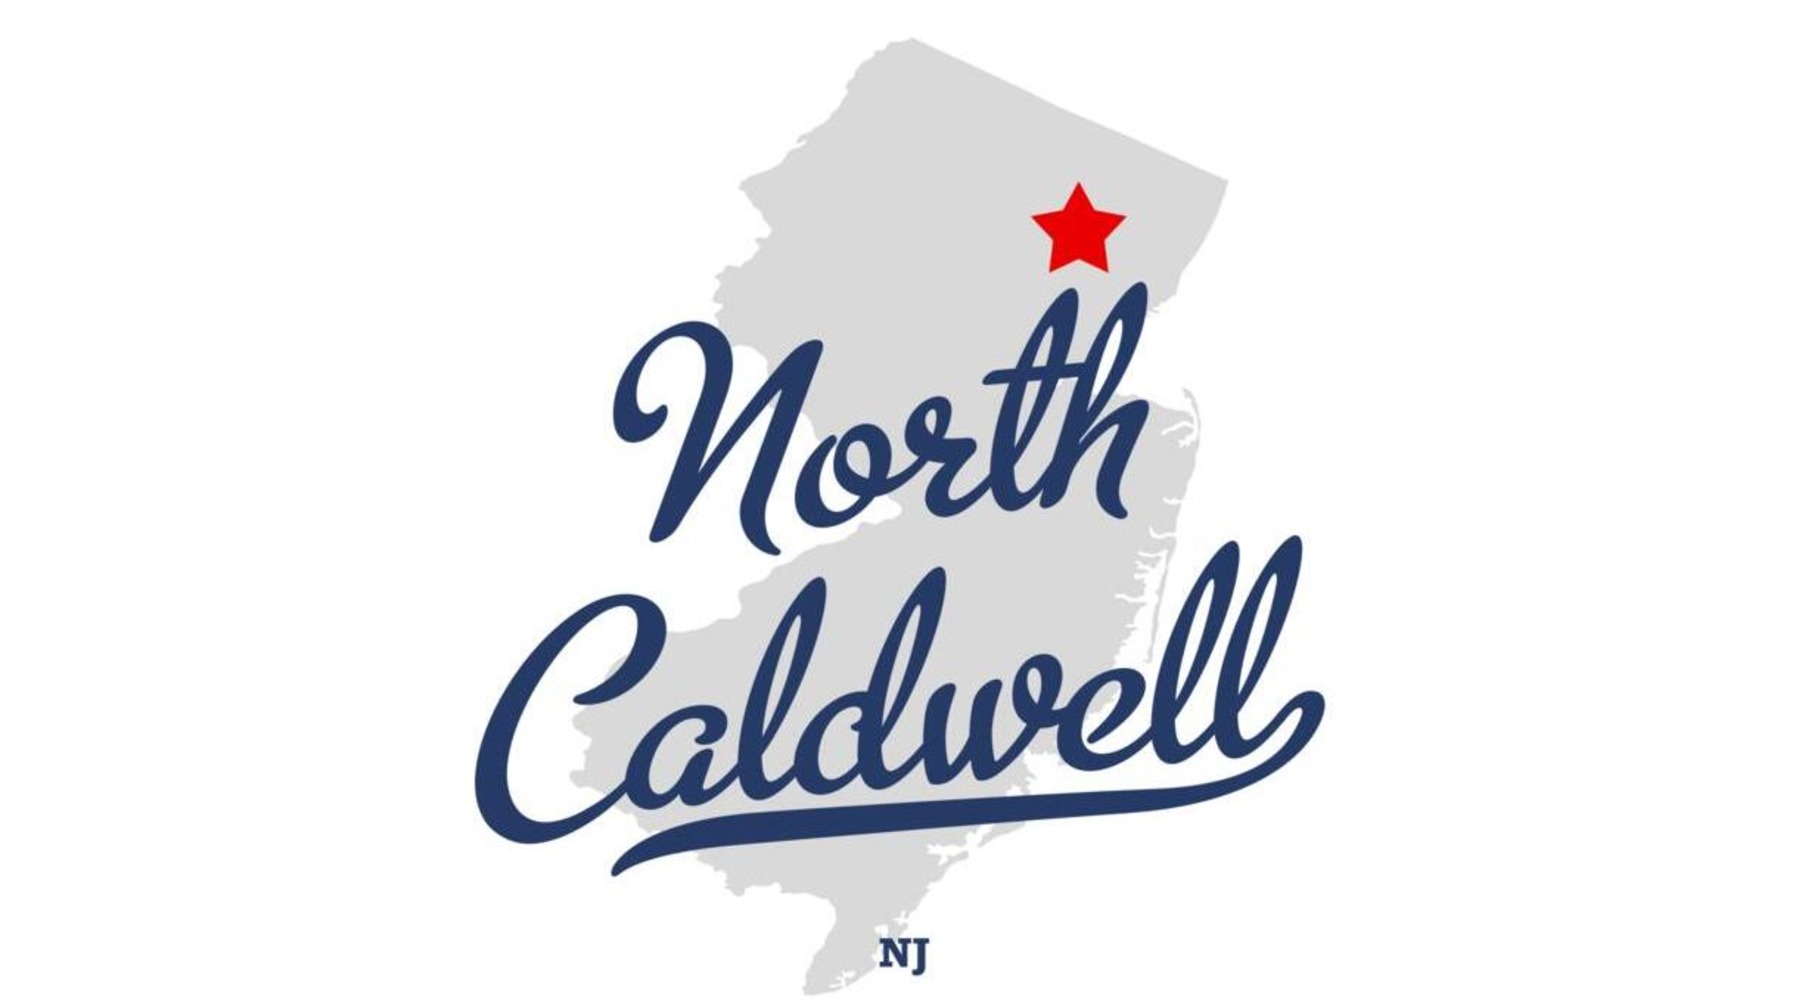 North Caldwell<br />
